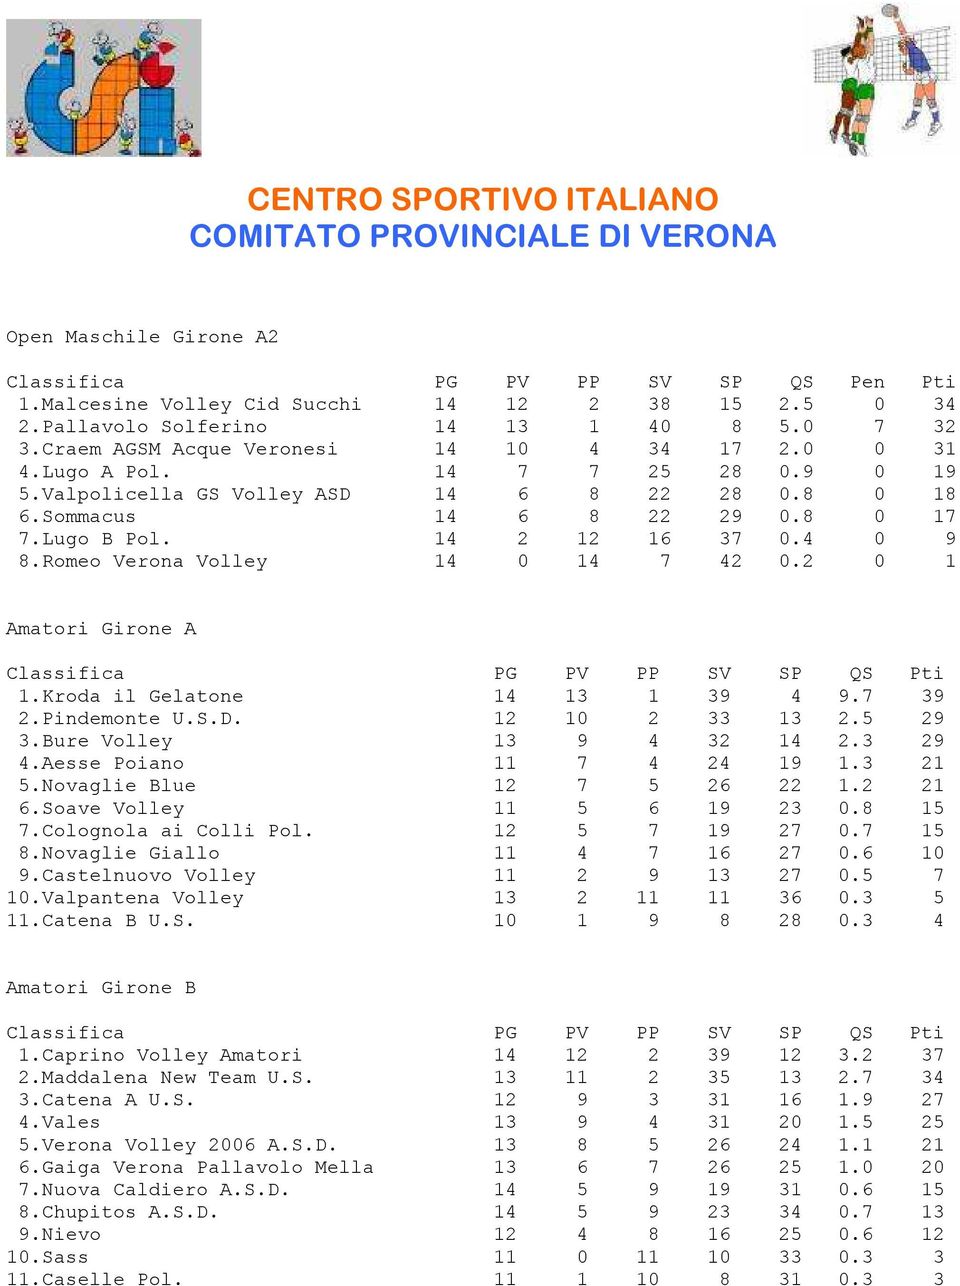 4 0 9 8.Romeo Verona Volley 14 0 14 7 42 0.2 0 1 Amatori Girone A 1.Kroda il Gelatone 14 13 1 39 4 9.7 39 2.Pindemonte U.S.D. 12 10 2 33 13 2.5 29 3.Bure Volley 13 9 4 32 14 2.3 29 4.